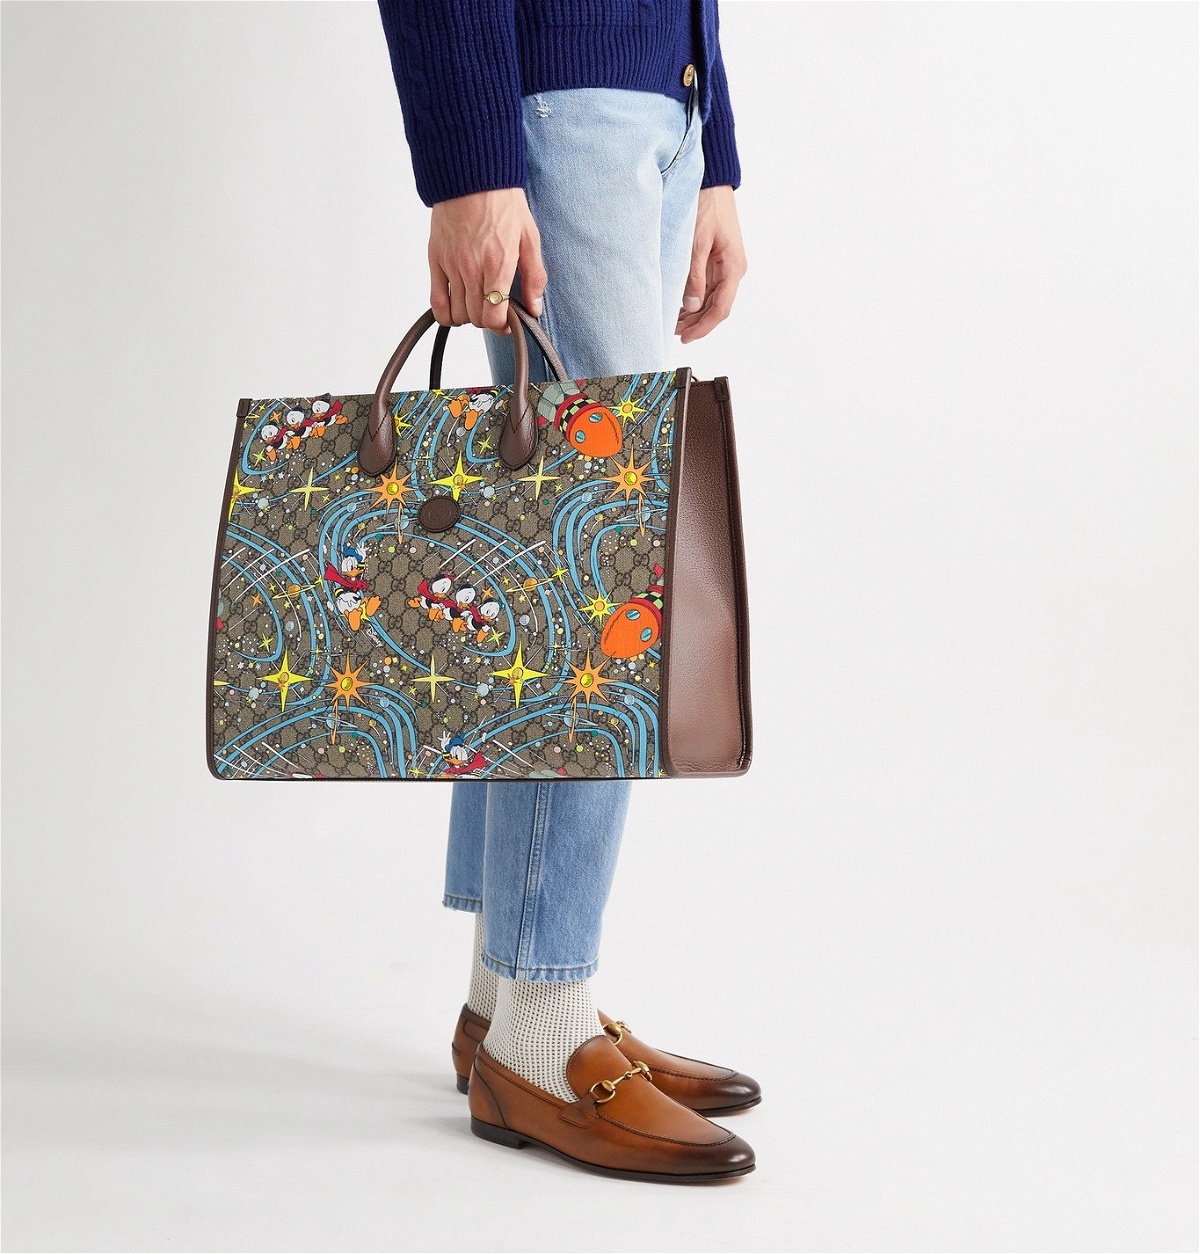 GUCCI GG Supreme Leather-Trimmed Monogrammed Coated-Canvas Tote Bag for Men